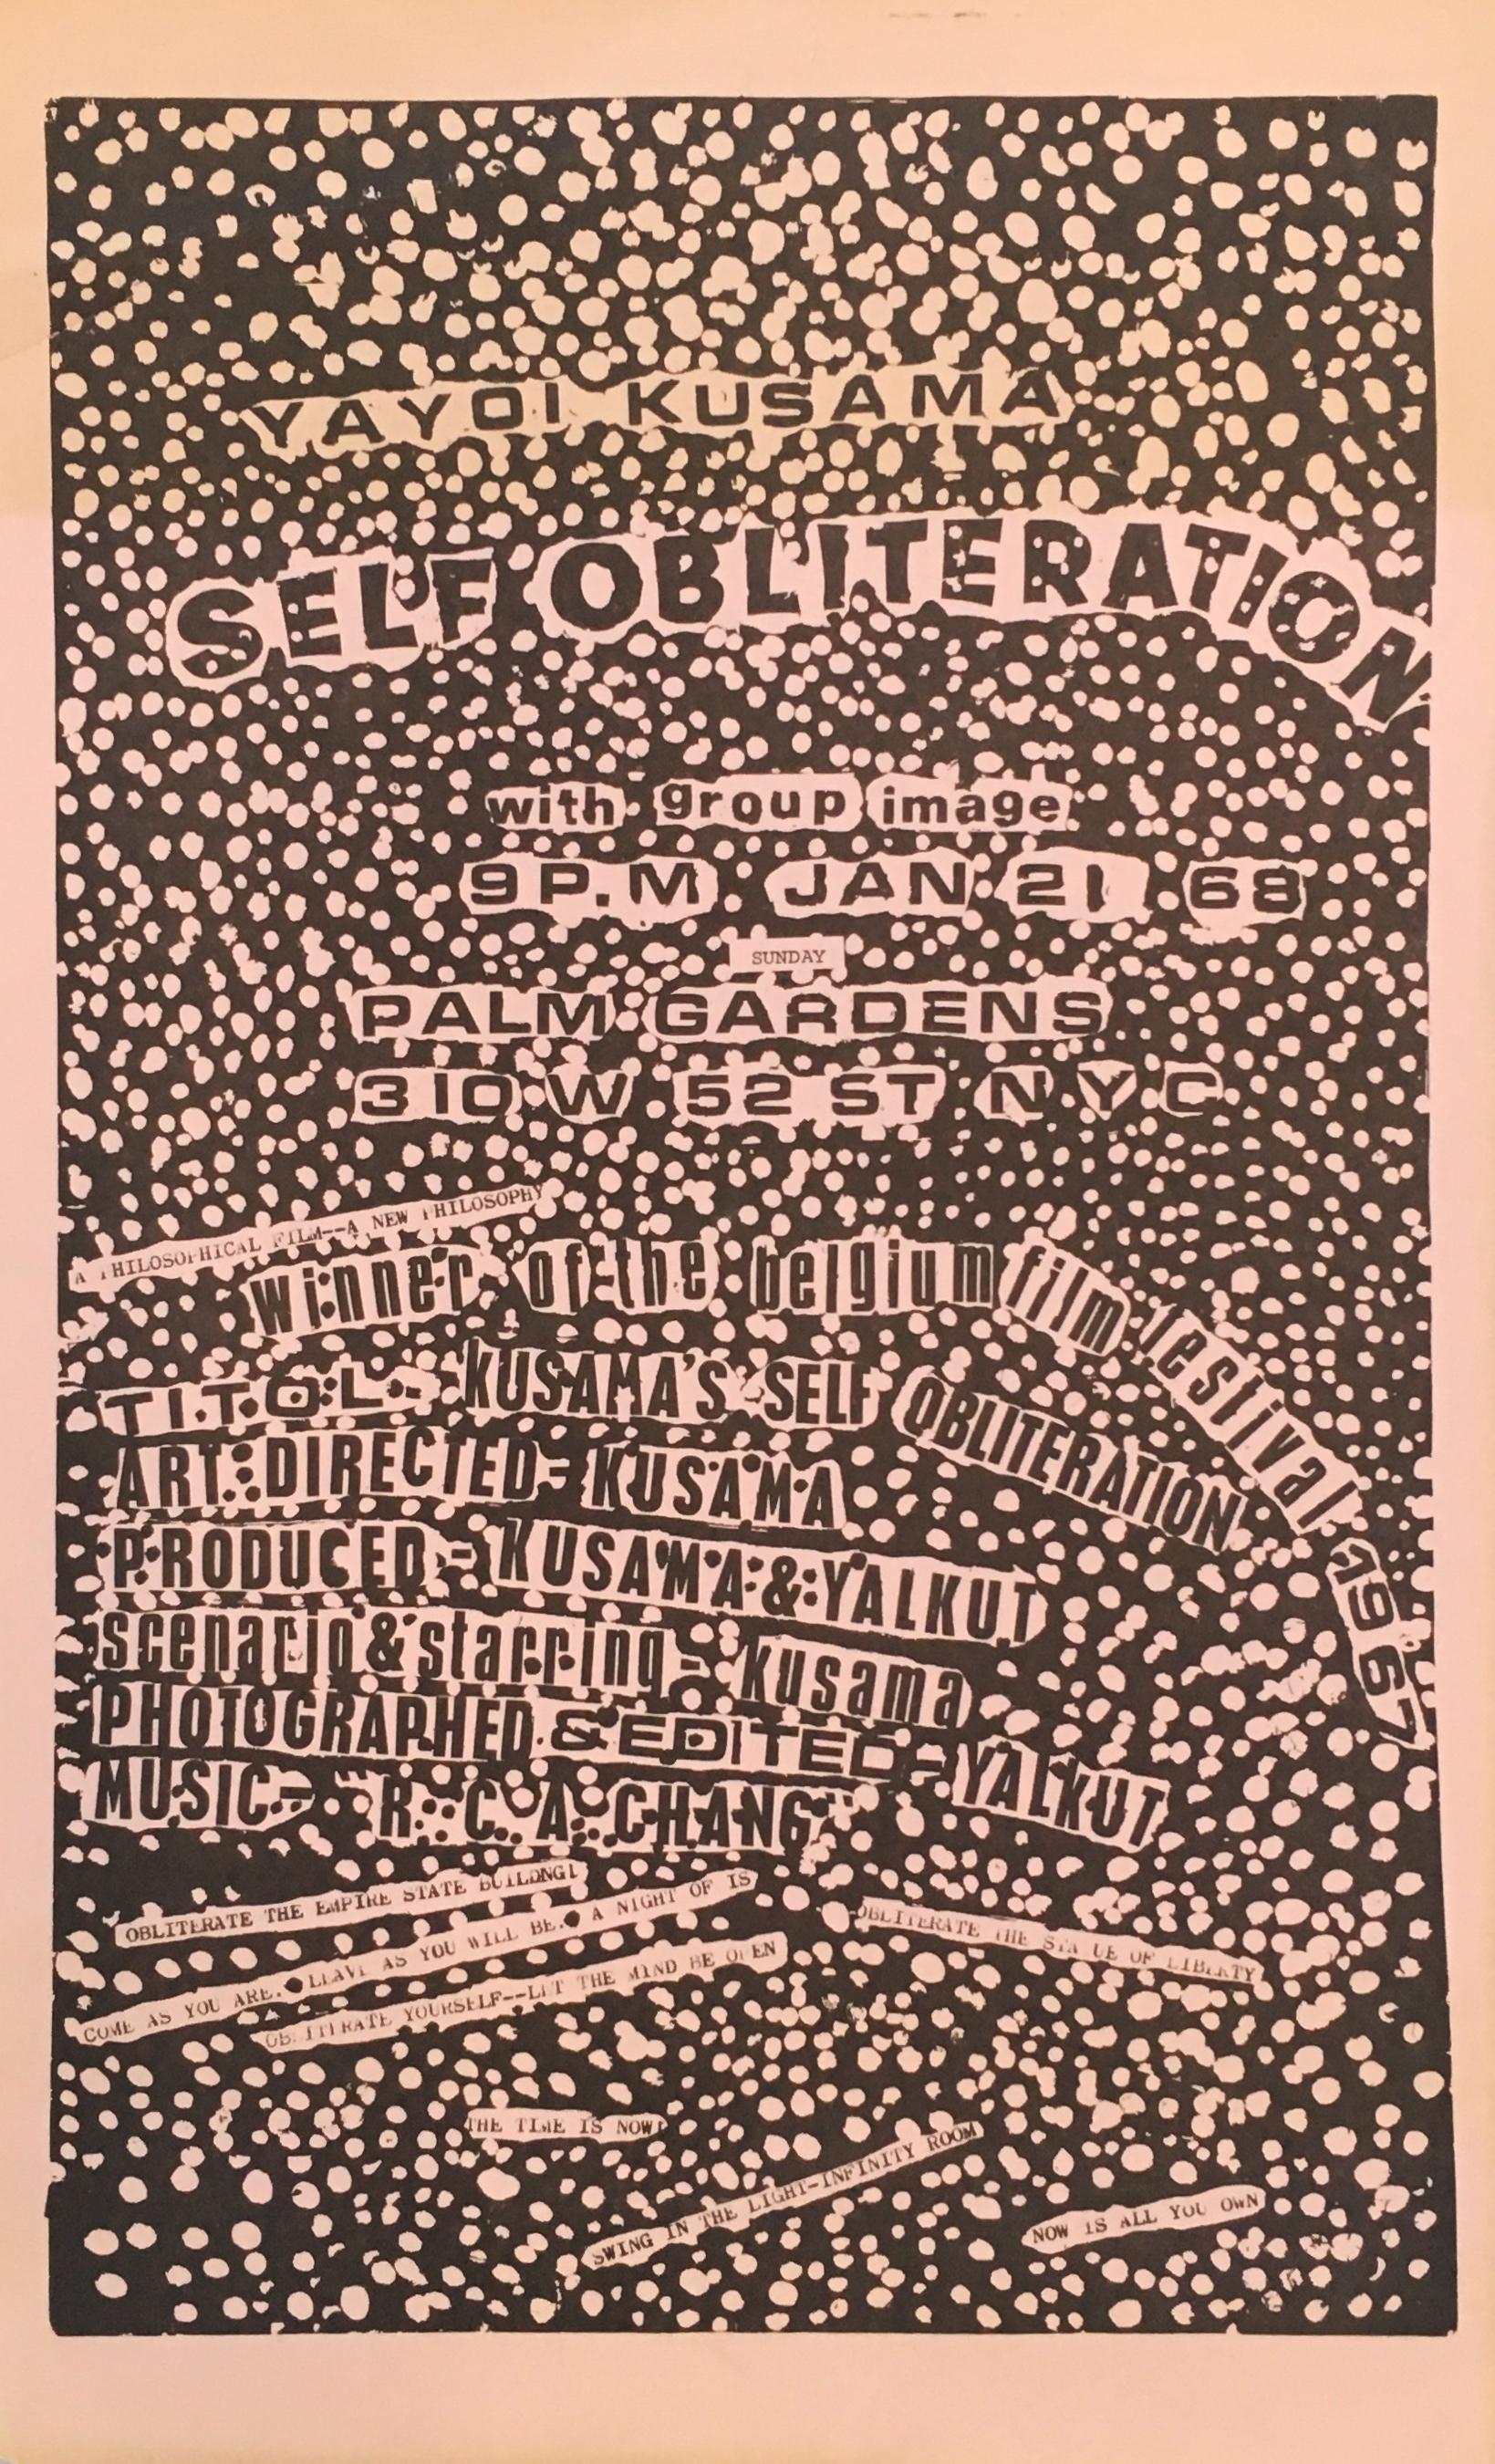 Yayoi Kusama Self-Obliteration  New York, NY 1968
Rare original flyer / announcement designed by Yayoi Kusama to promote a screening of Kusama's historic 1968 film 